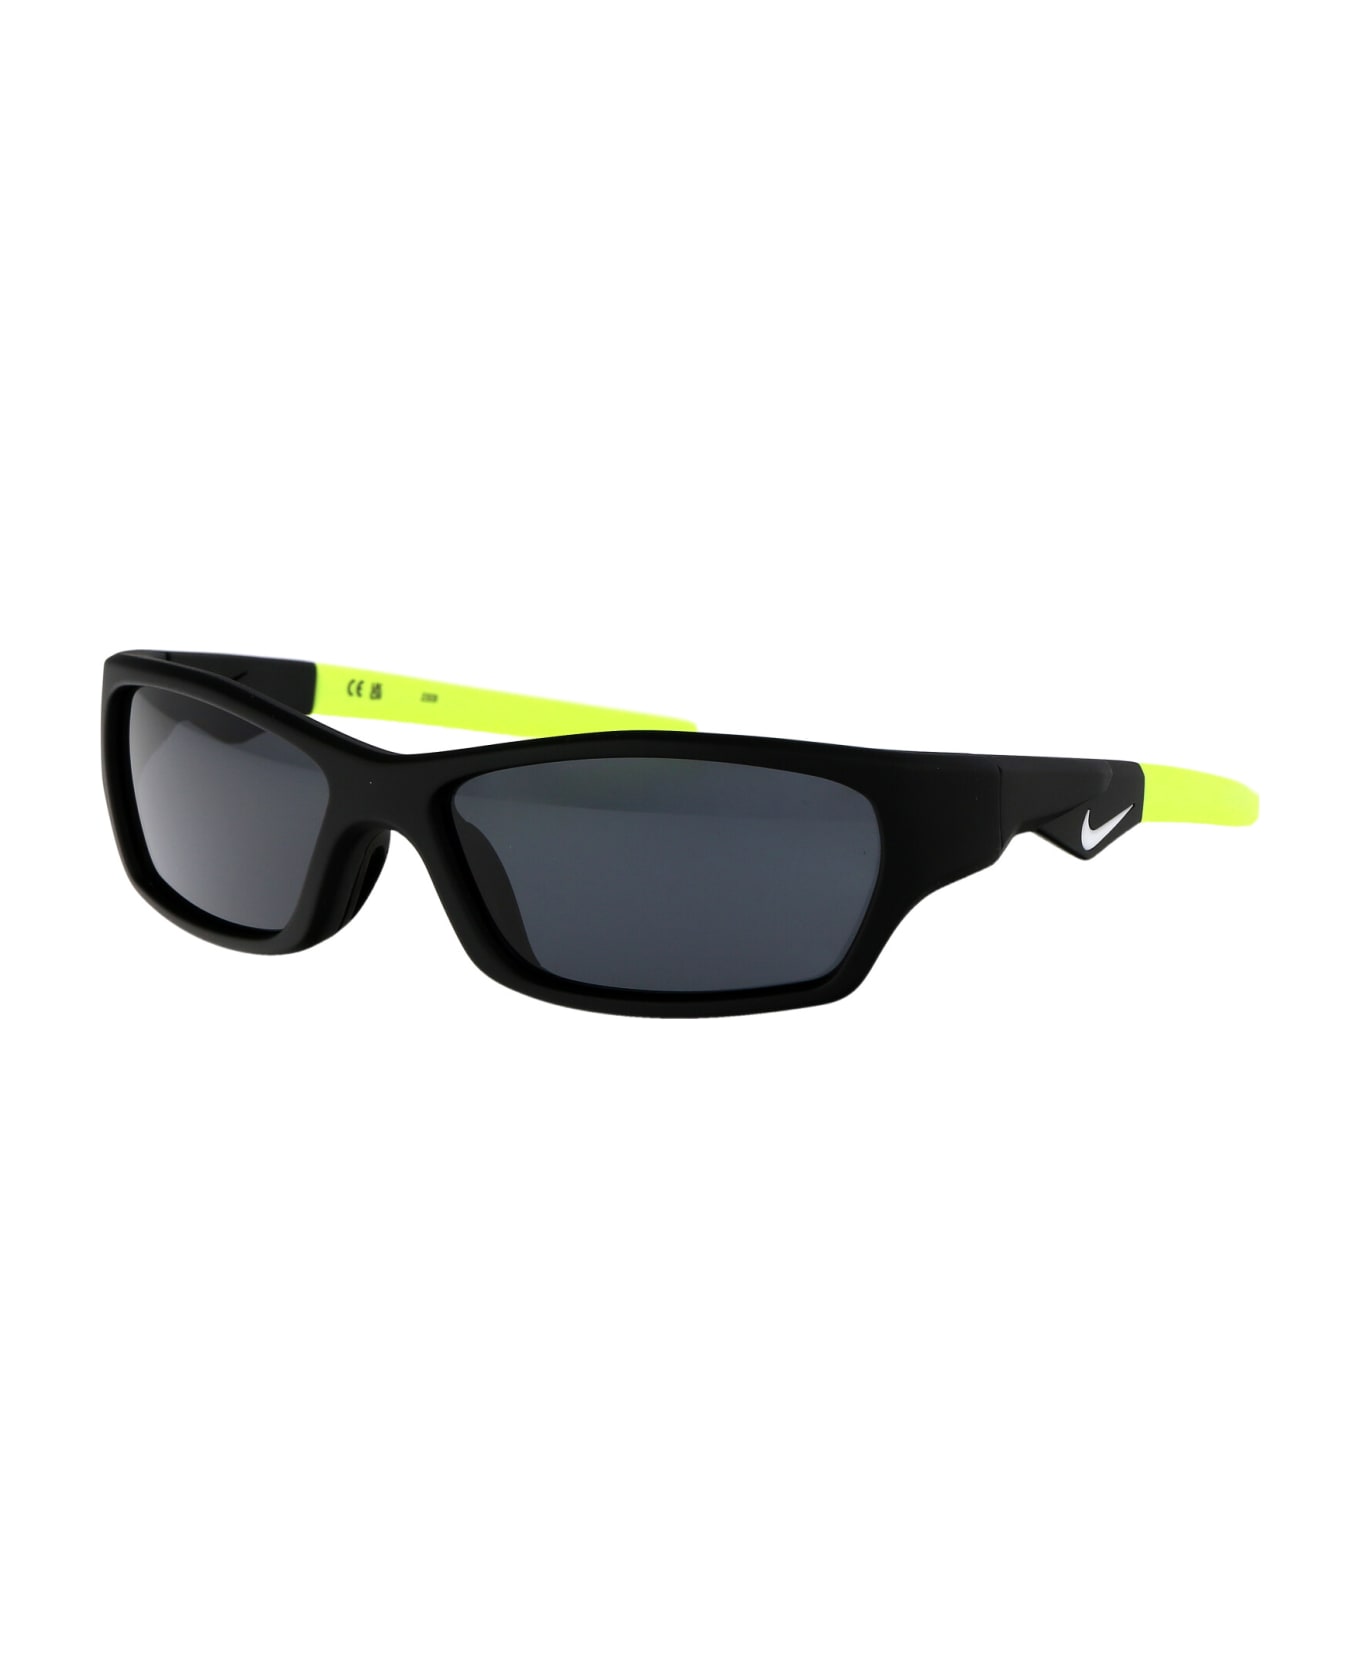 Nike Jolt Sunglasses - 010 MATTE BLACK NOIR MAT サングラス